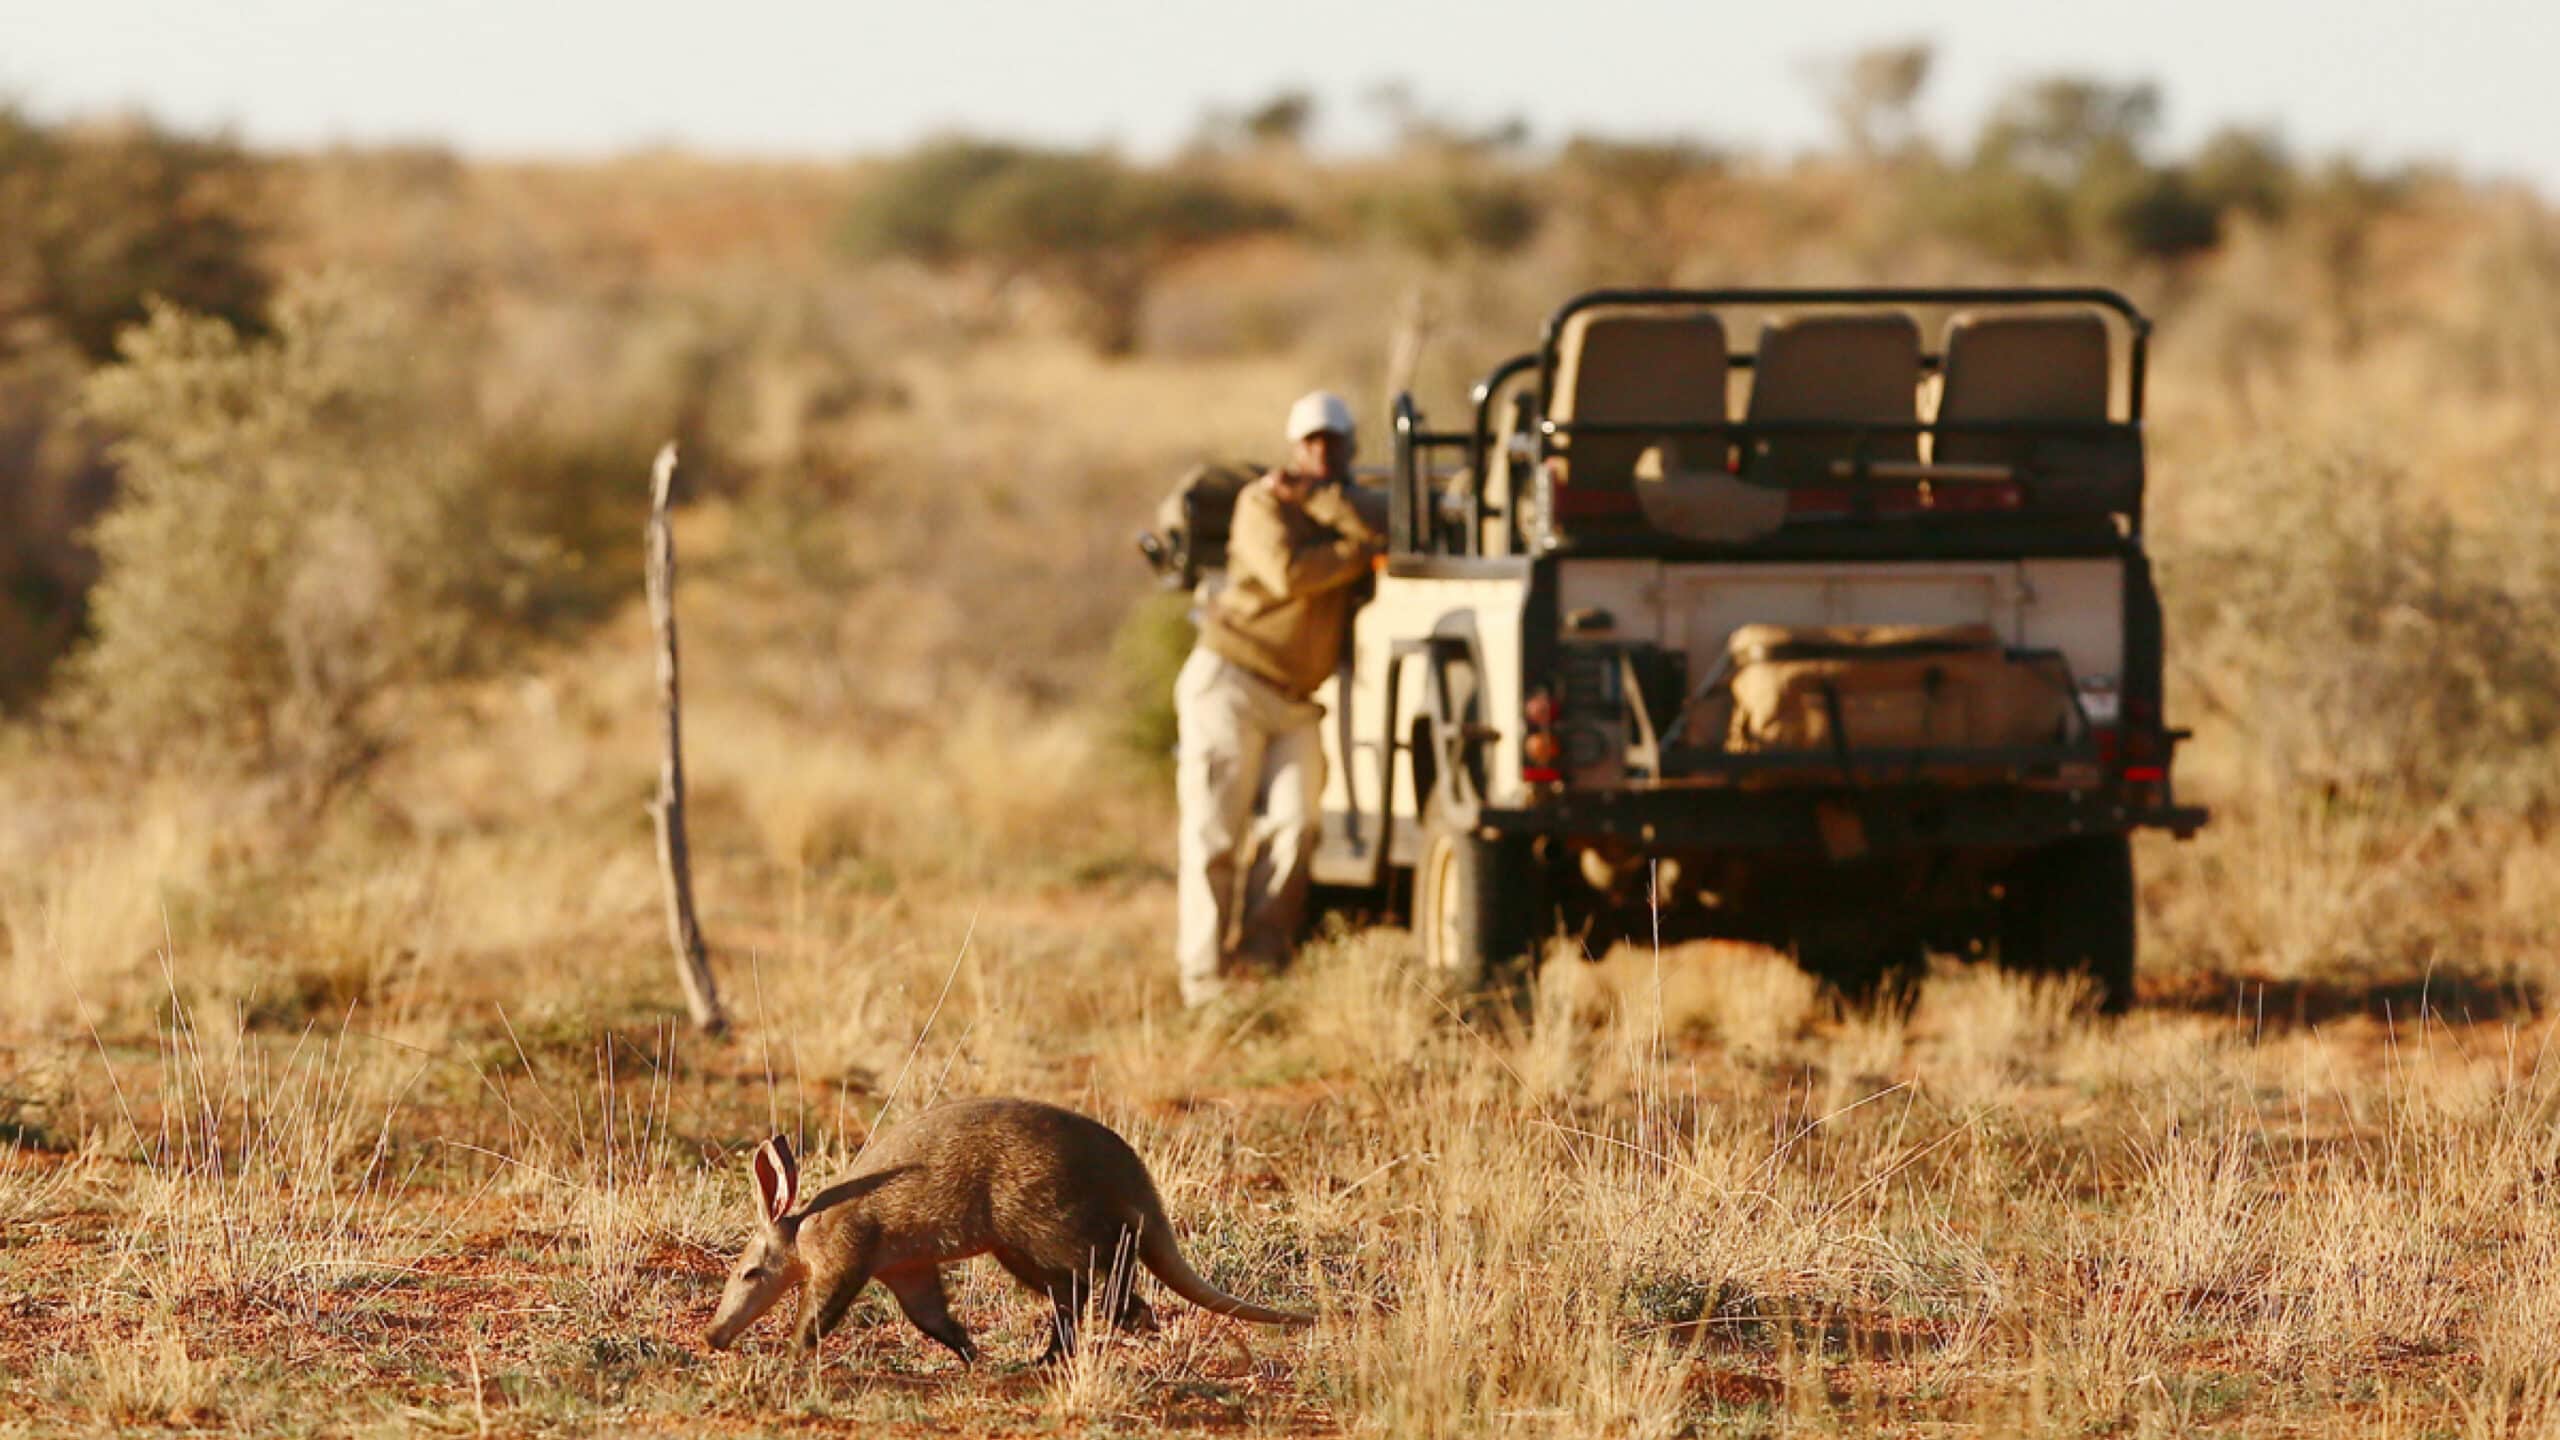 An aardvark and a game drive vehicle on a safari in the Kalahari. Future of Travel Post-COVID